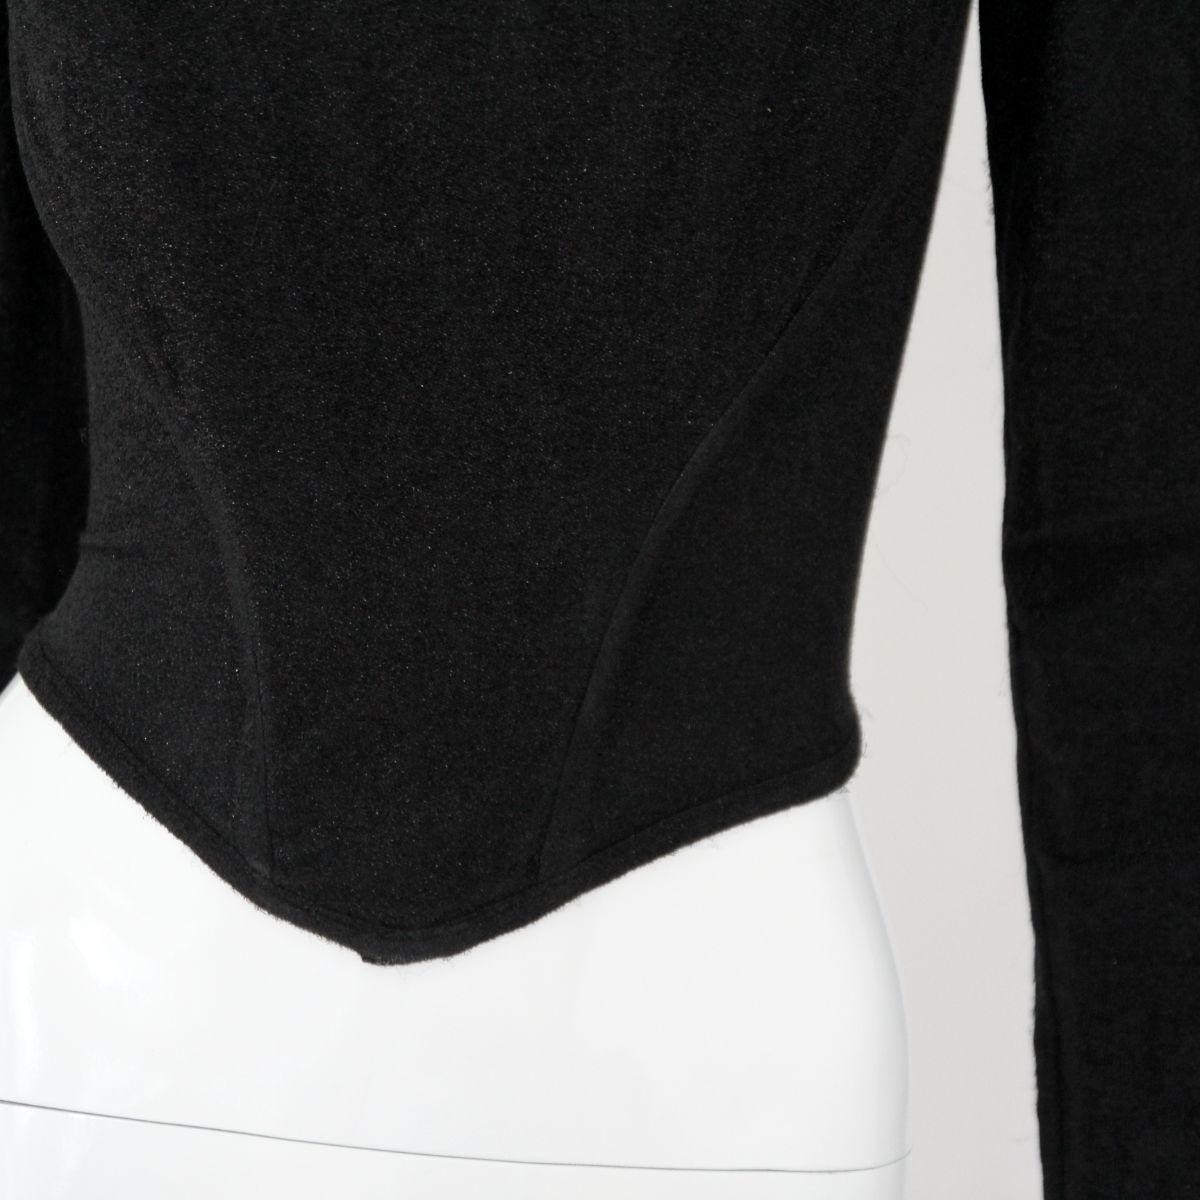 Women's VIVIENNE WESTWOOD 1995 Iconic Long-Sleeve corset in black glitter cotton blend